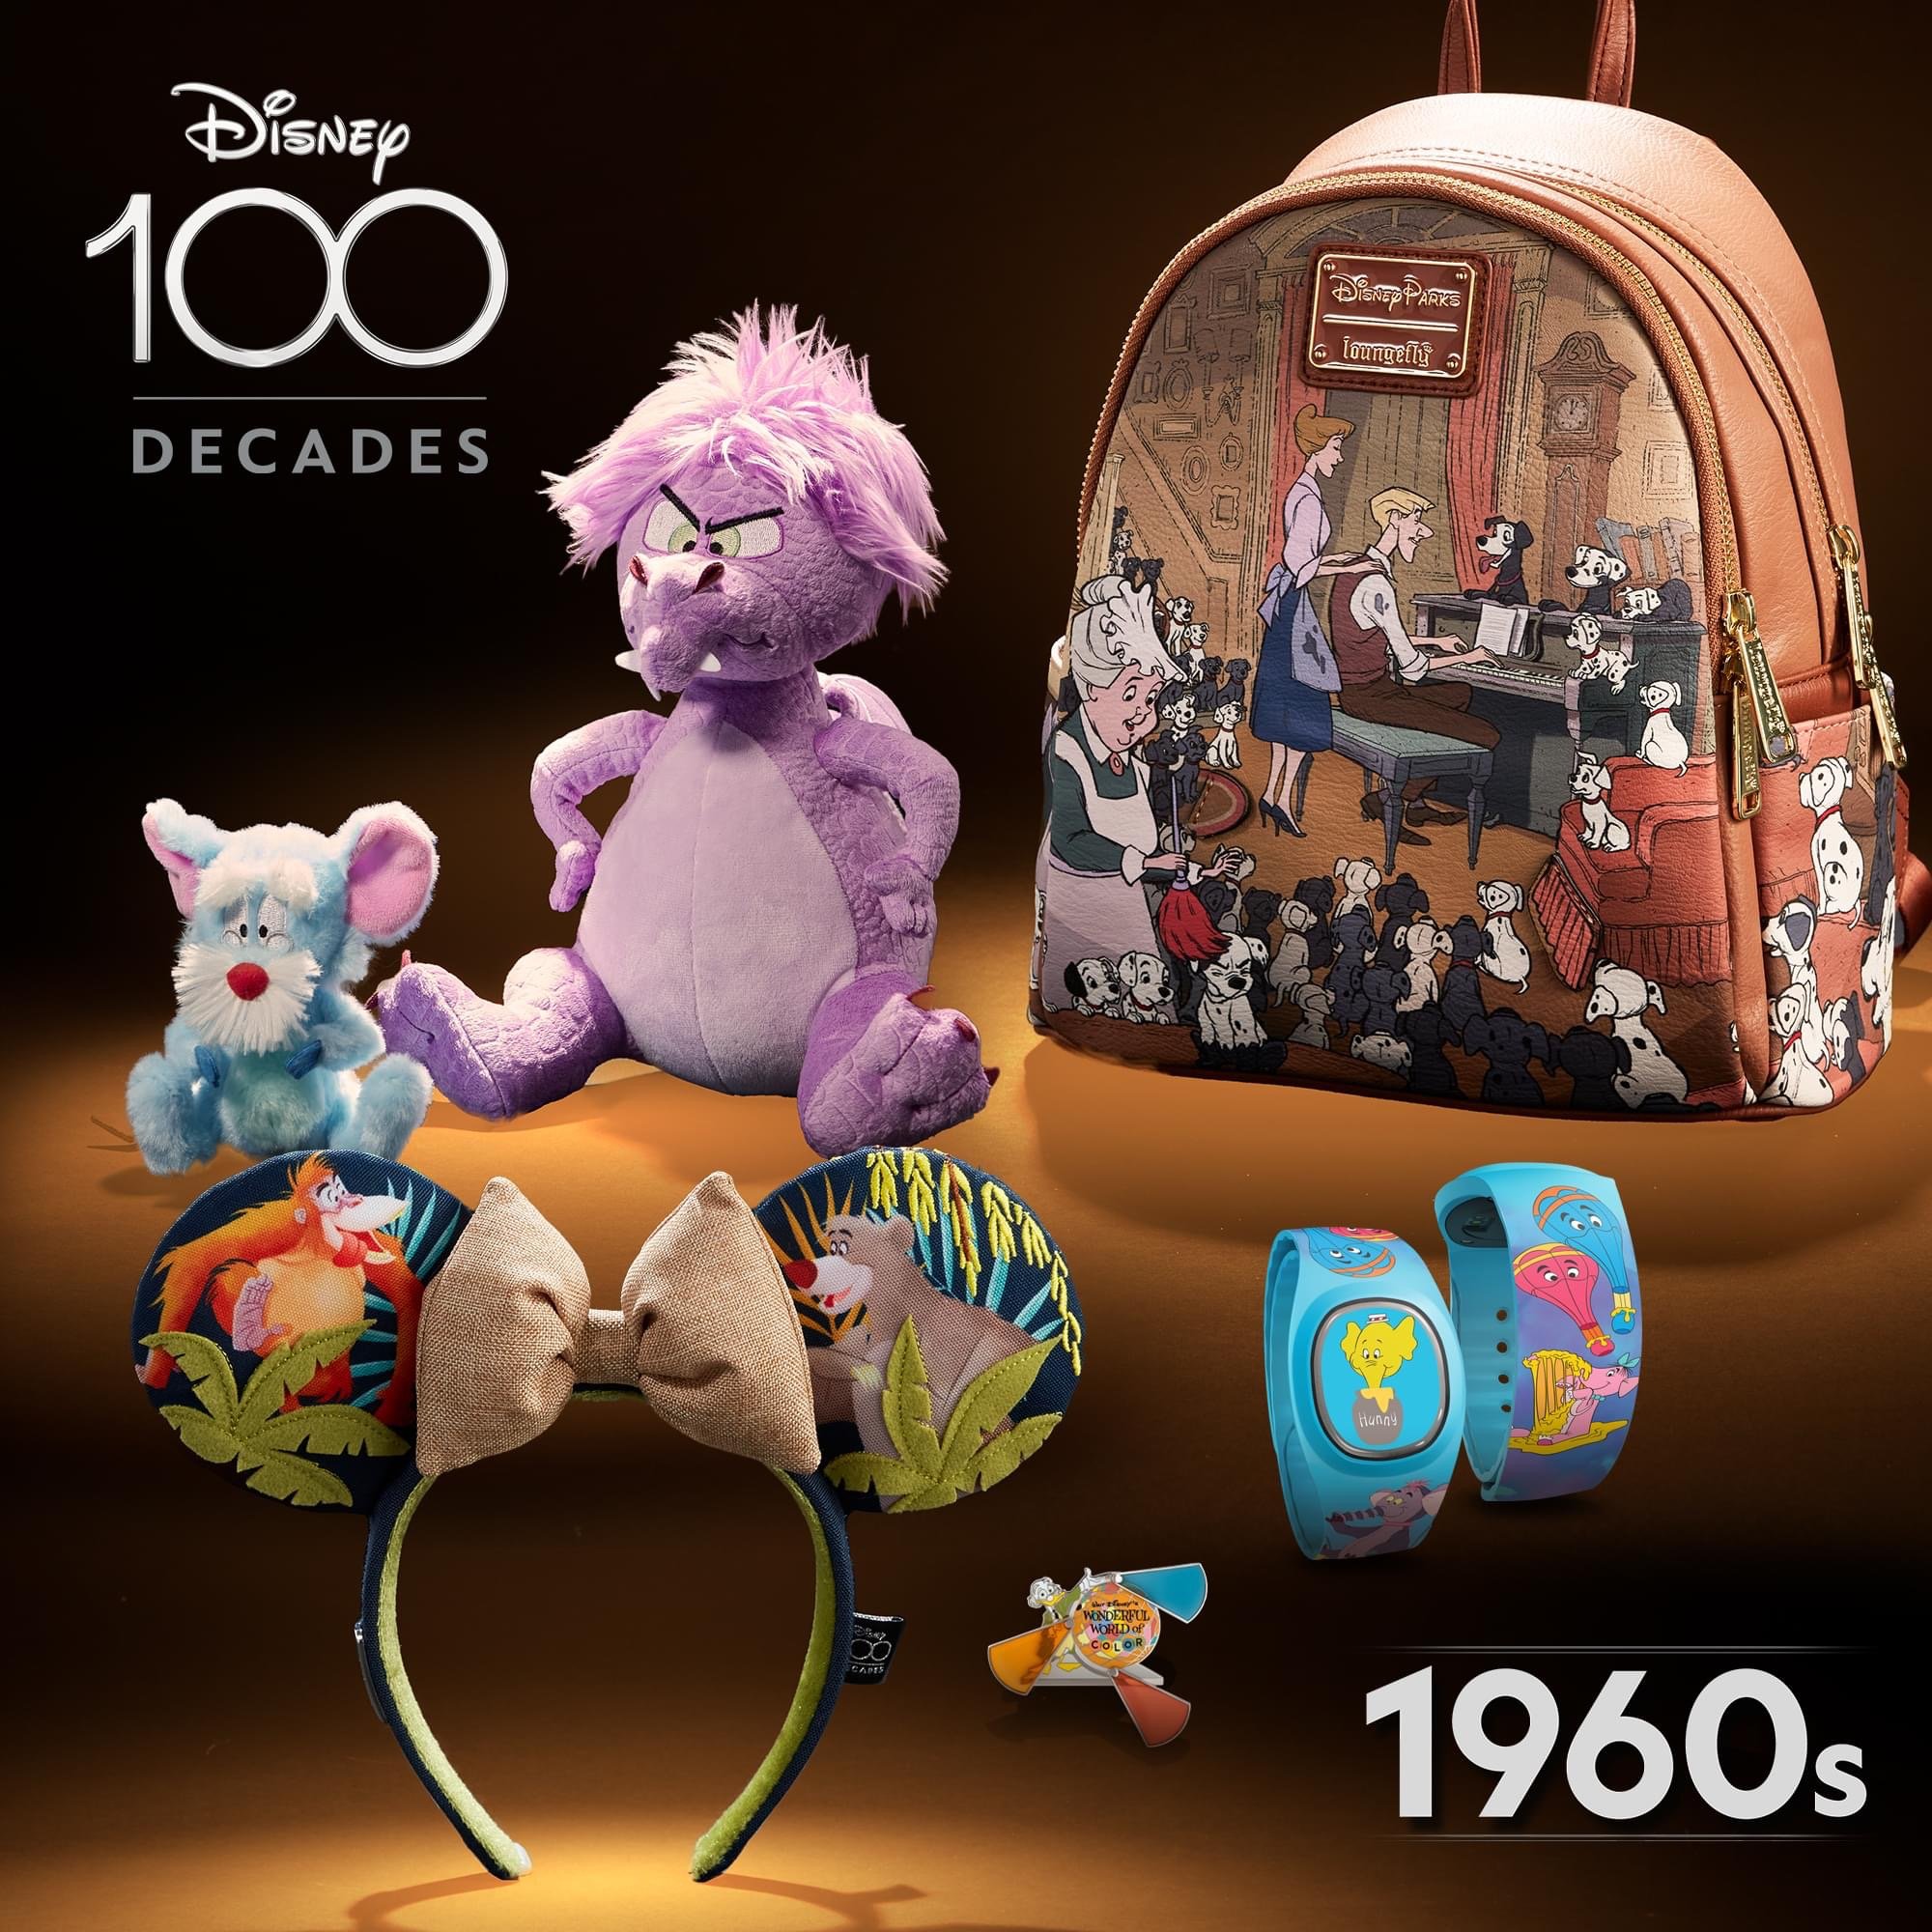 Disney100 Decades 1960s Collection on shopDisney — EXTRA MAGIC MINUTES